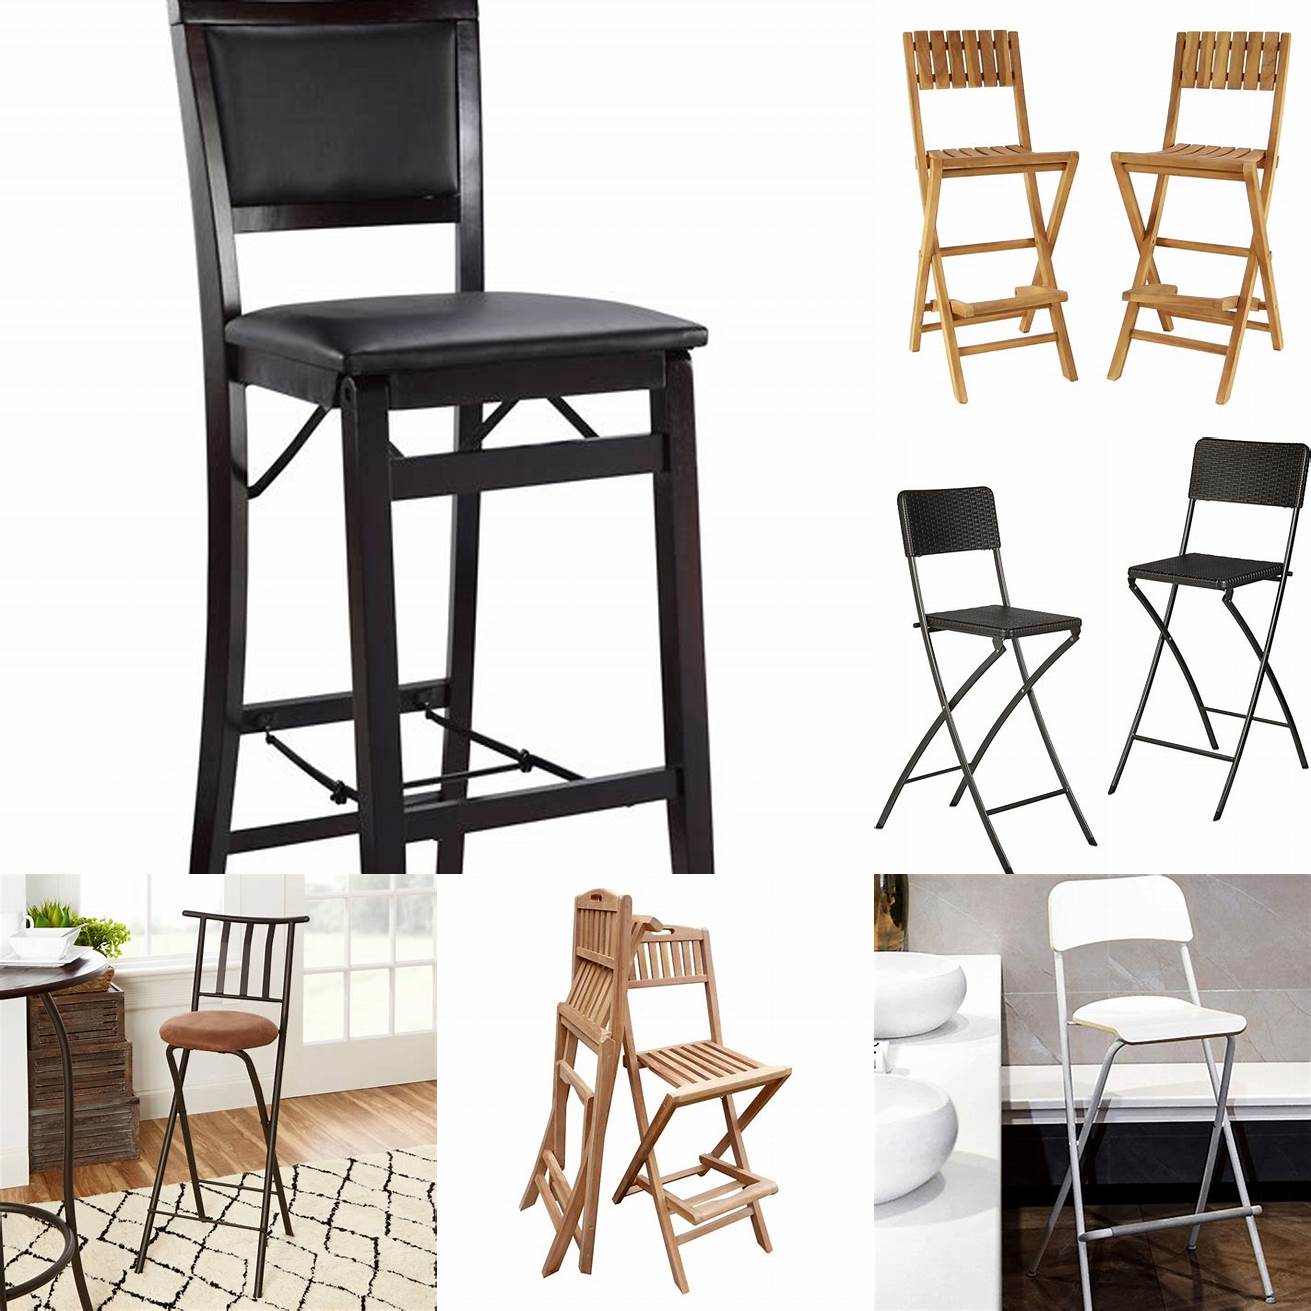 Folding bar stools